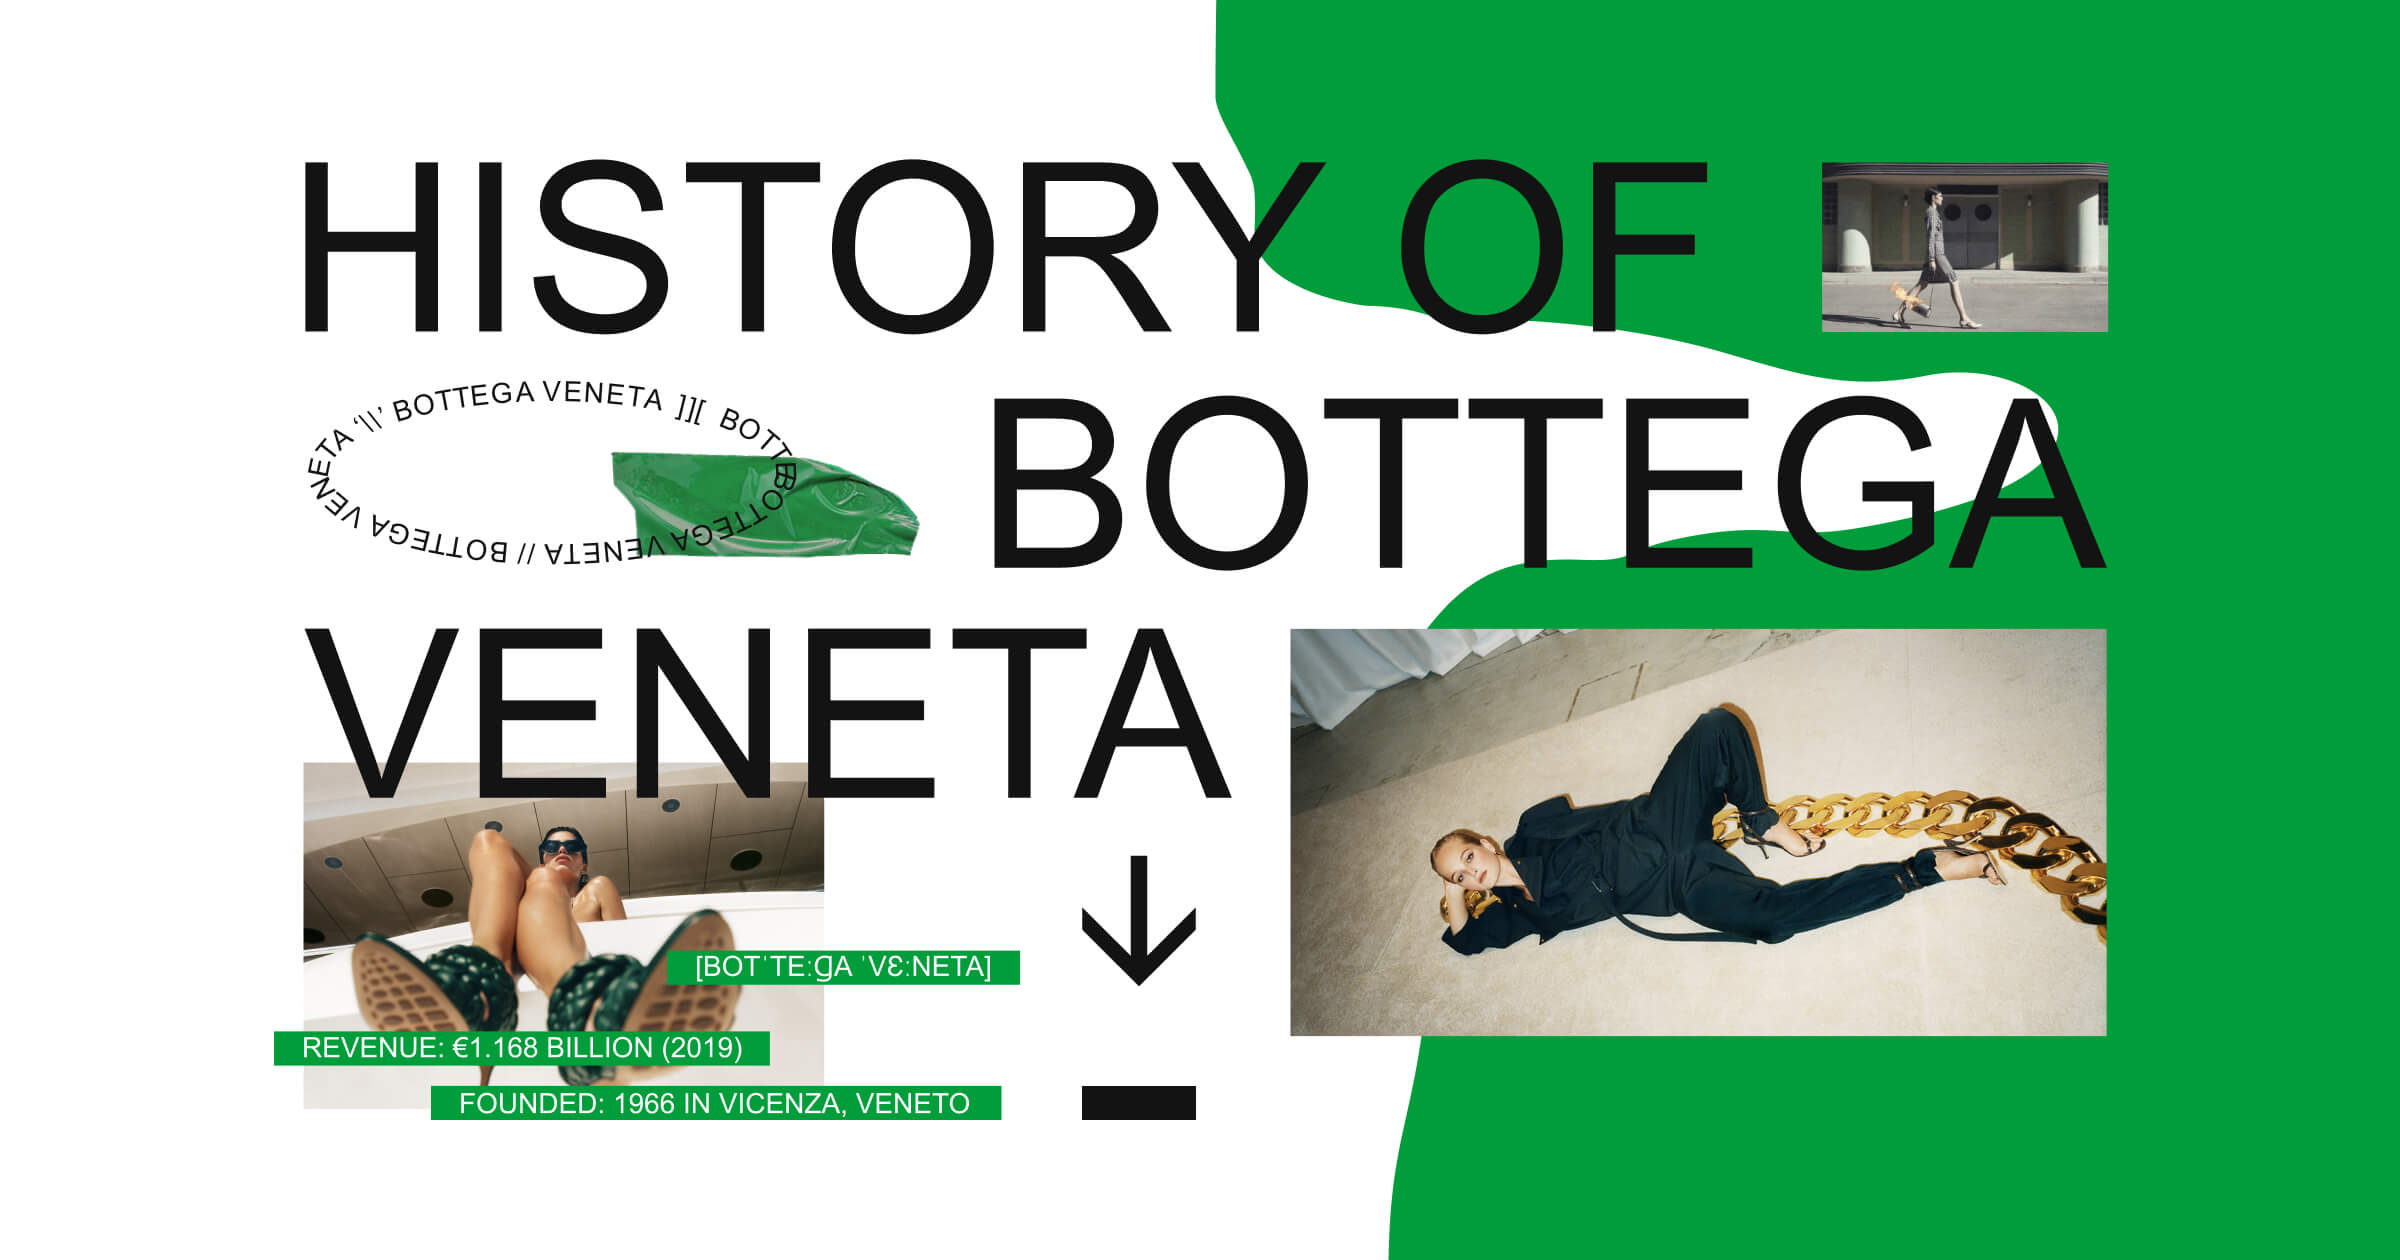 Fun Facts About Bottega Veneta